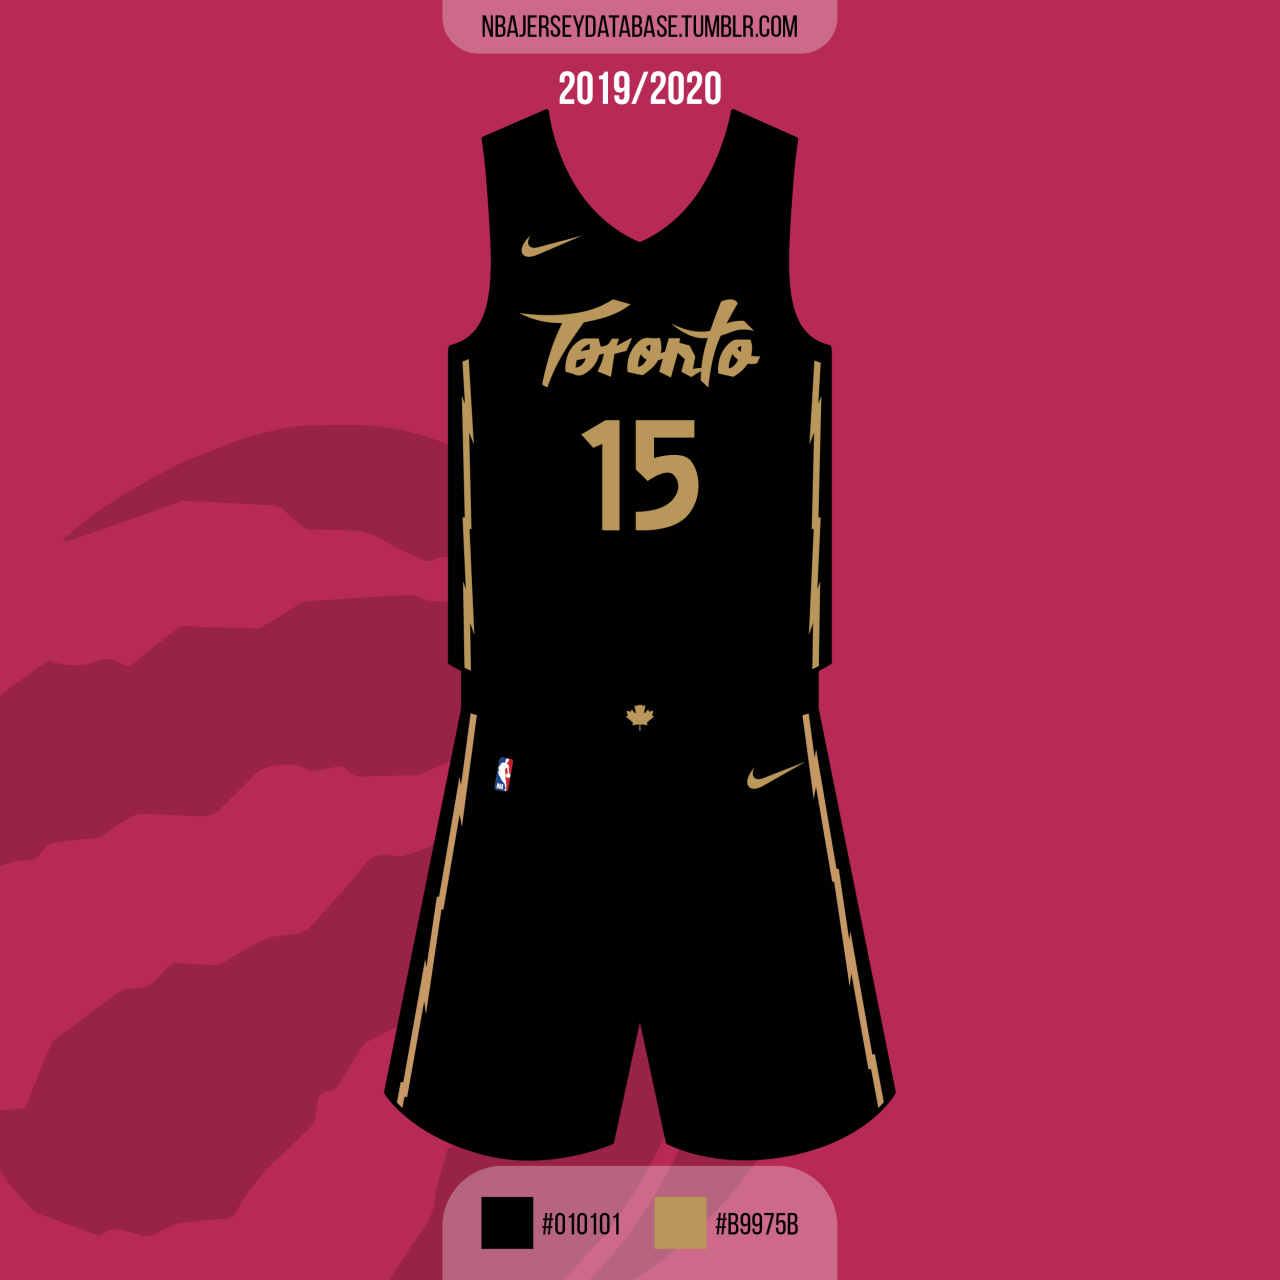 Toronto Raptors 2020-21 City Jersey by llu258 on DeviantArt